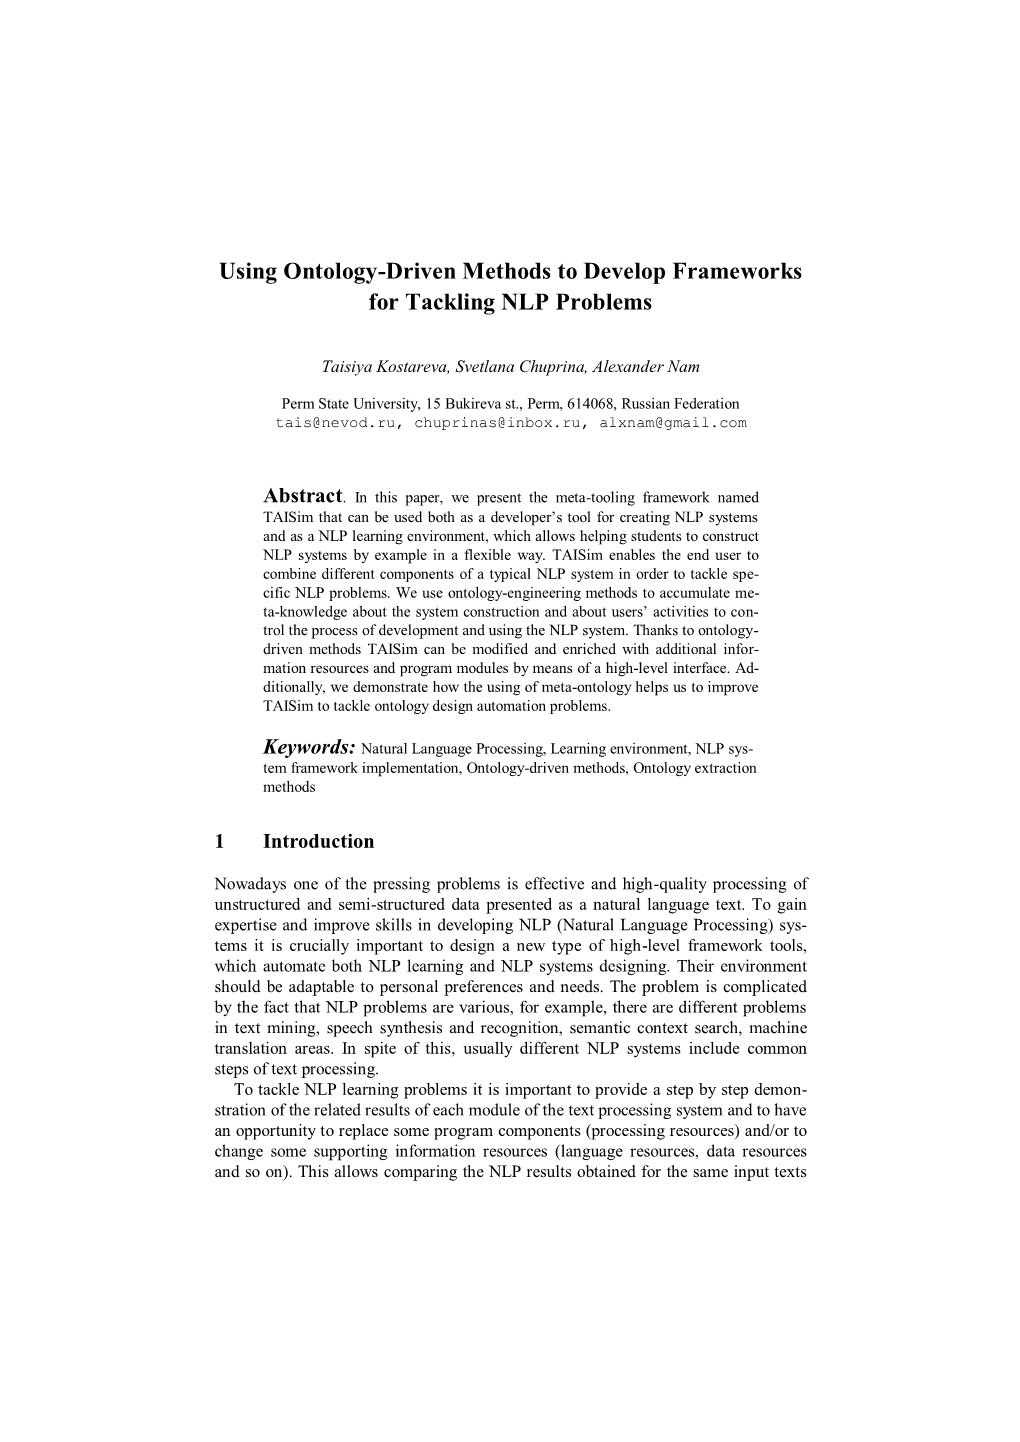 Using Ontology-Driven Methods to Develop Frameworks for Tackling NLP Problems